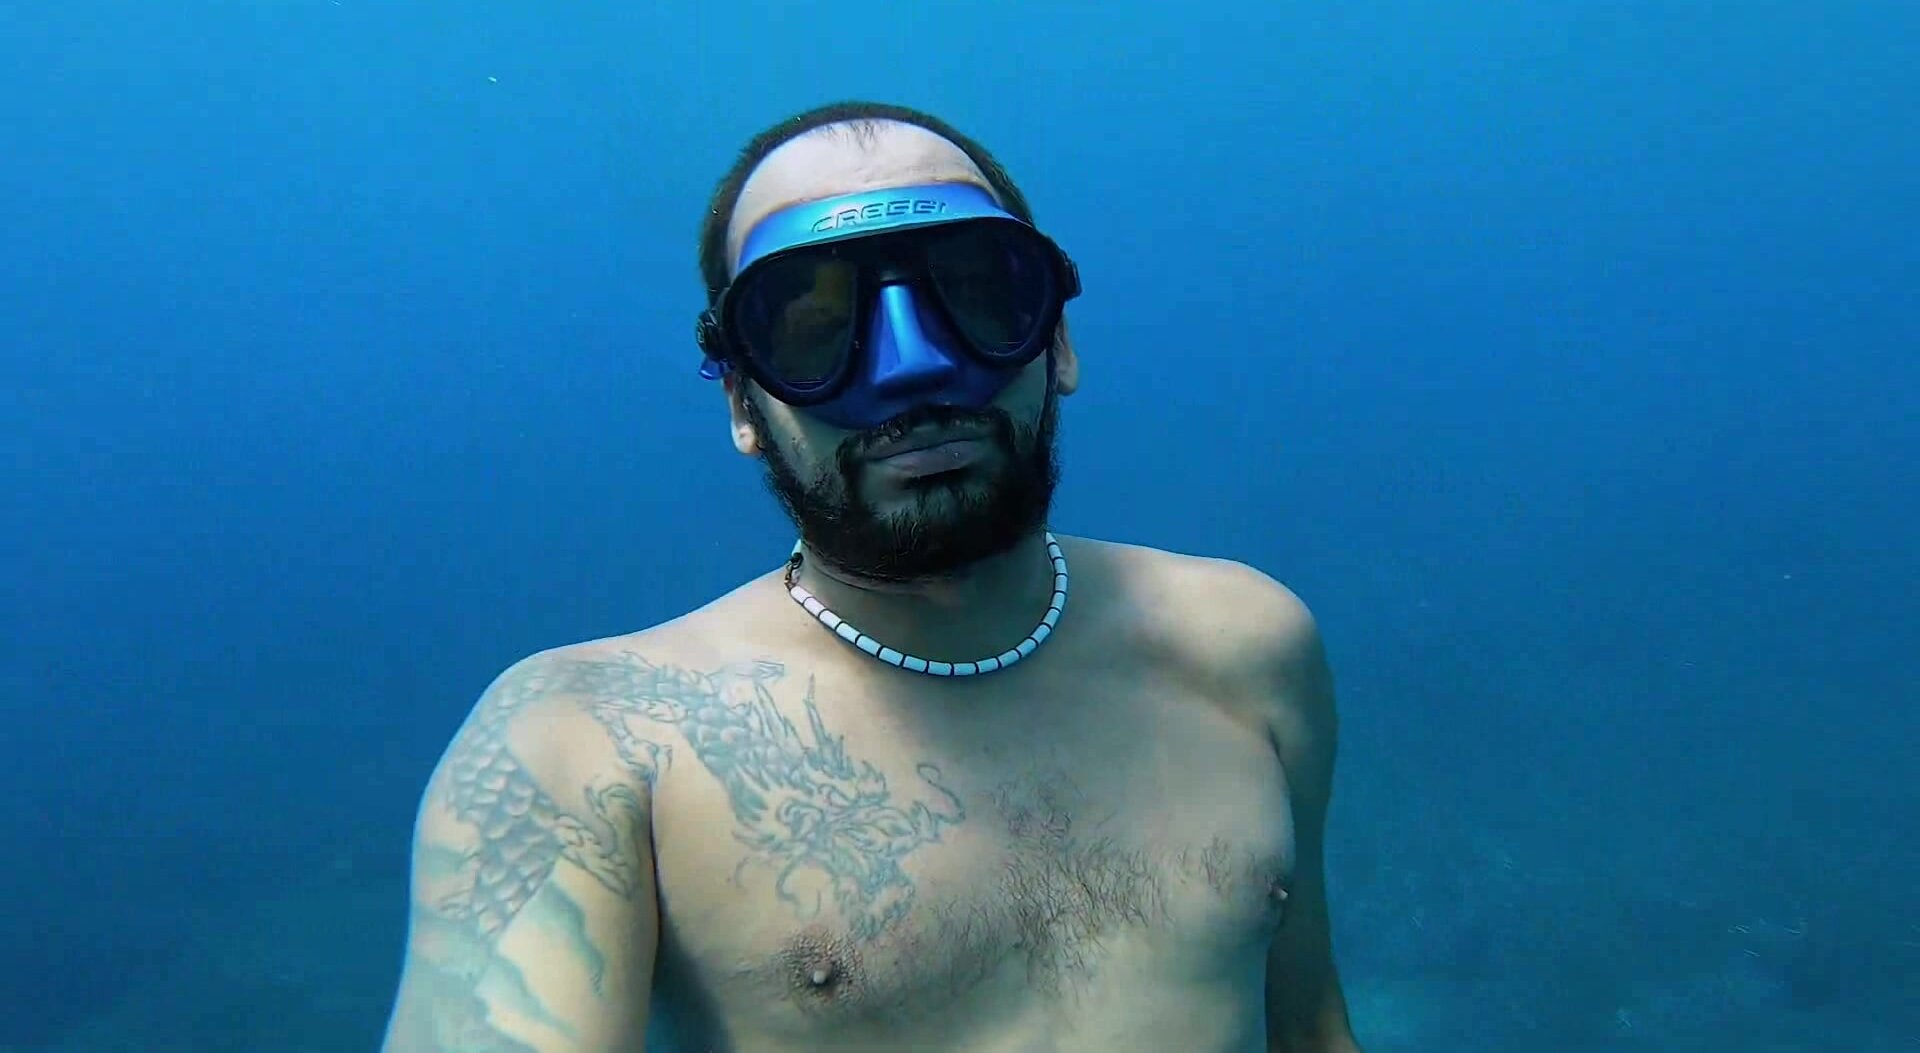 Breatholding masked underwater in sea